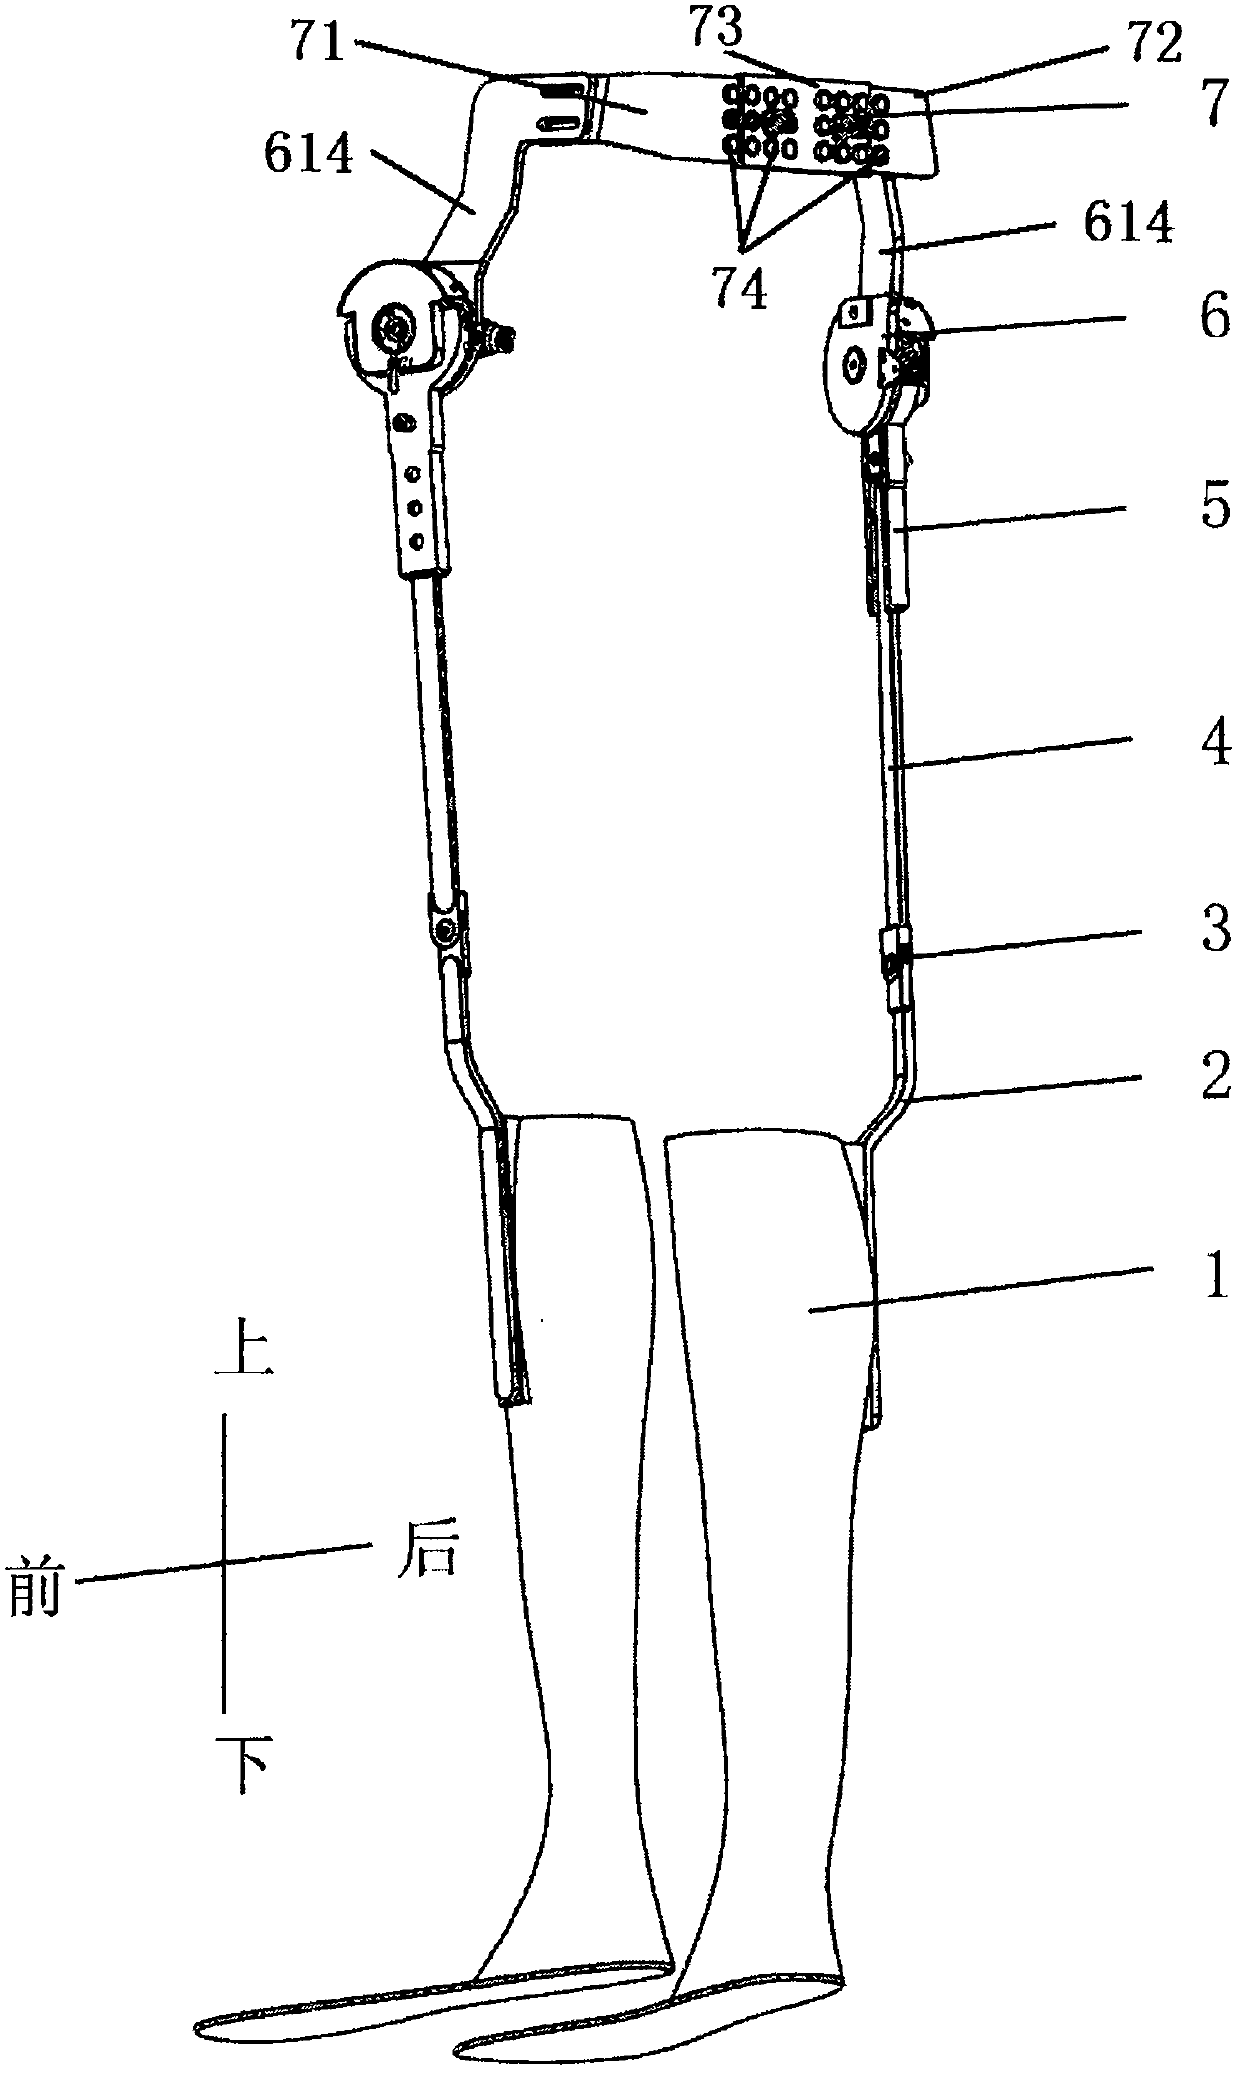 Powerless hip joint energy storage walking aiding exoskeleton